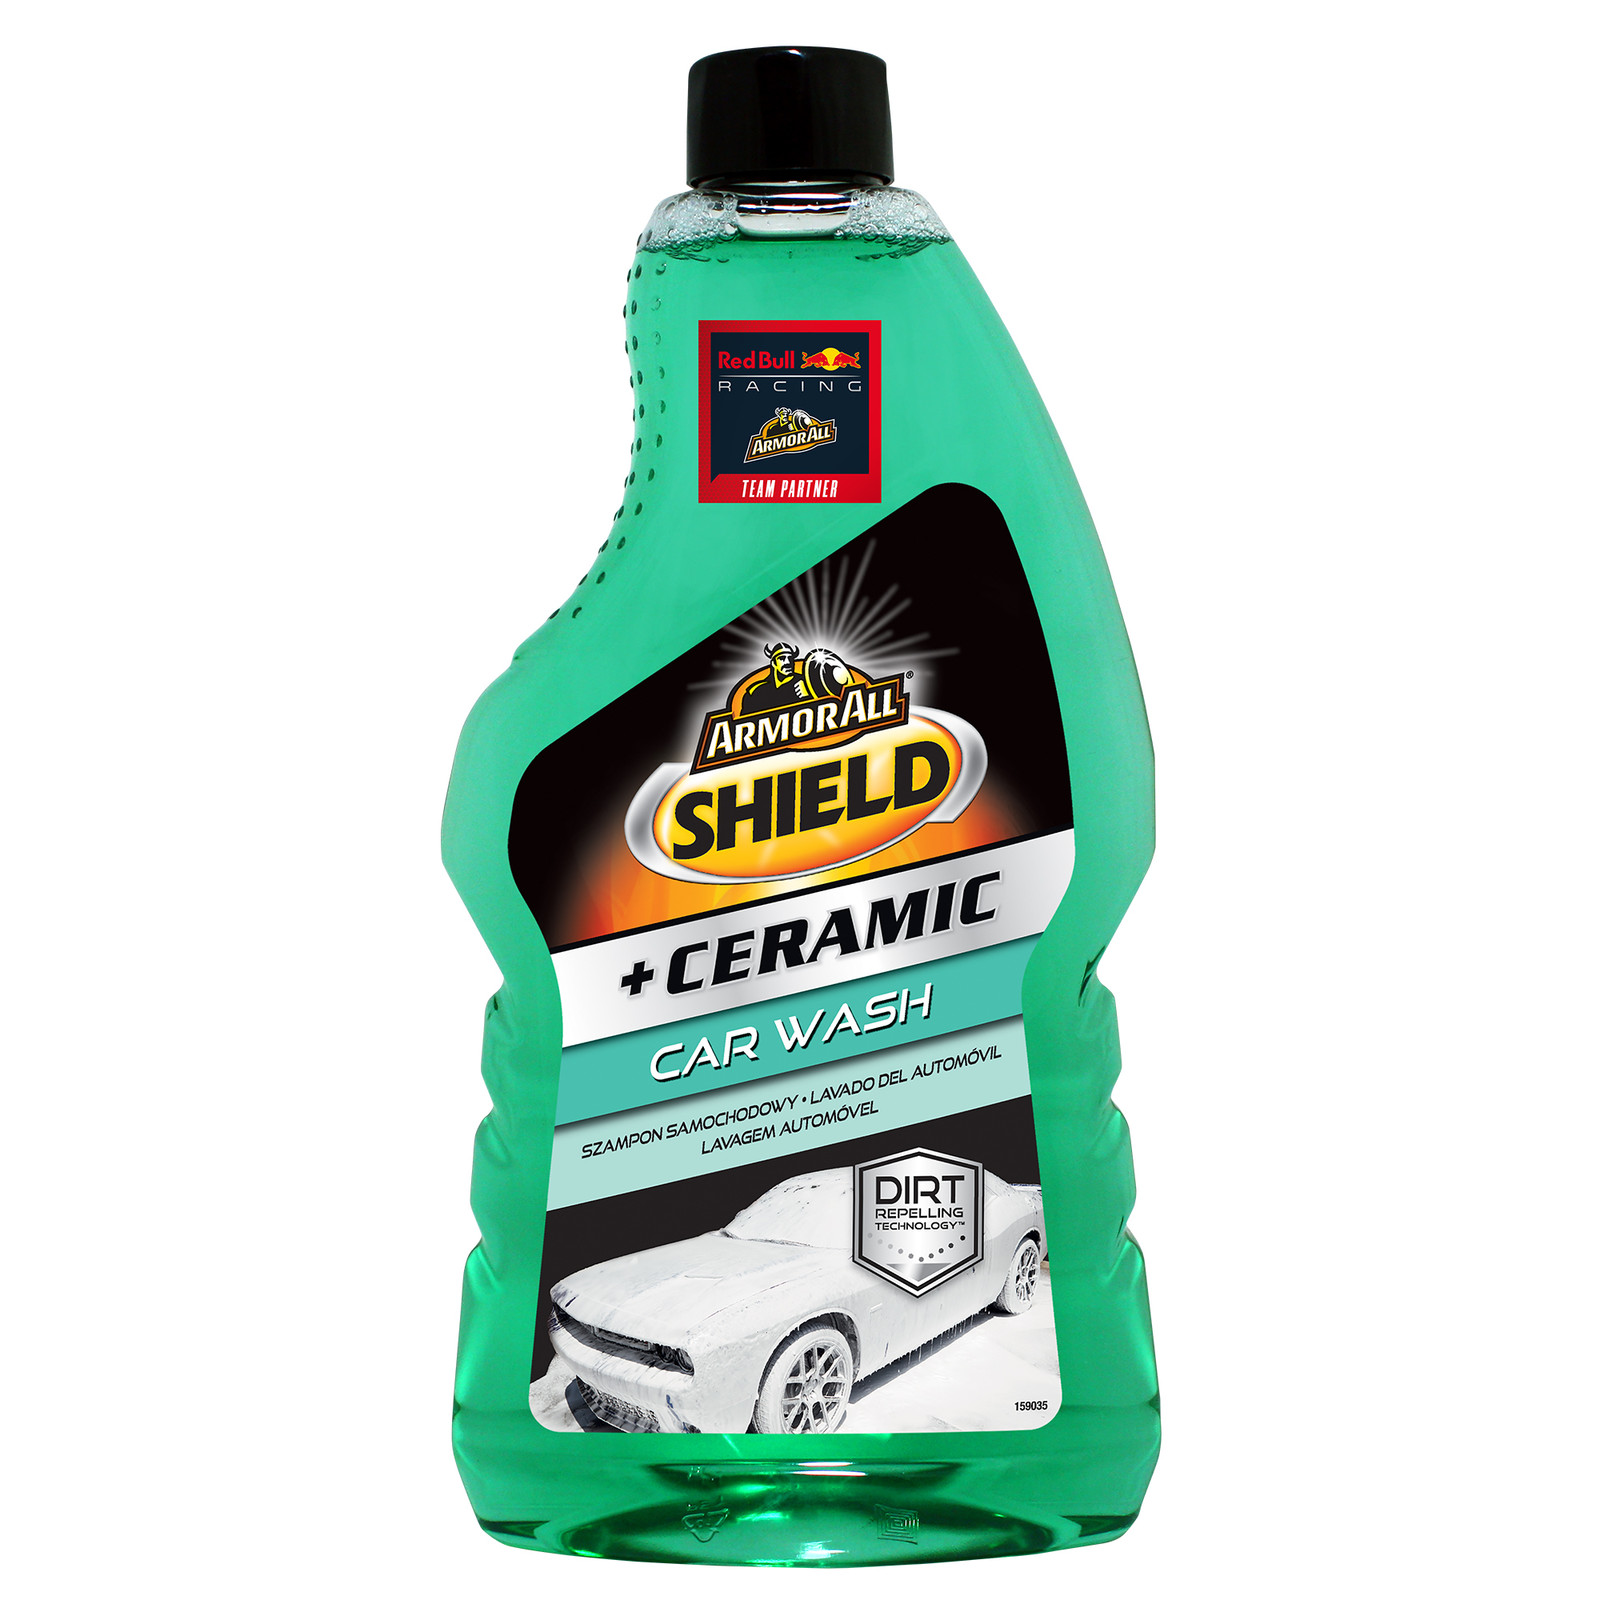 ArmorAll Shield Ceramic car wash - 520ml